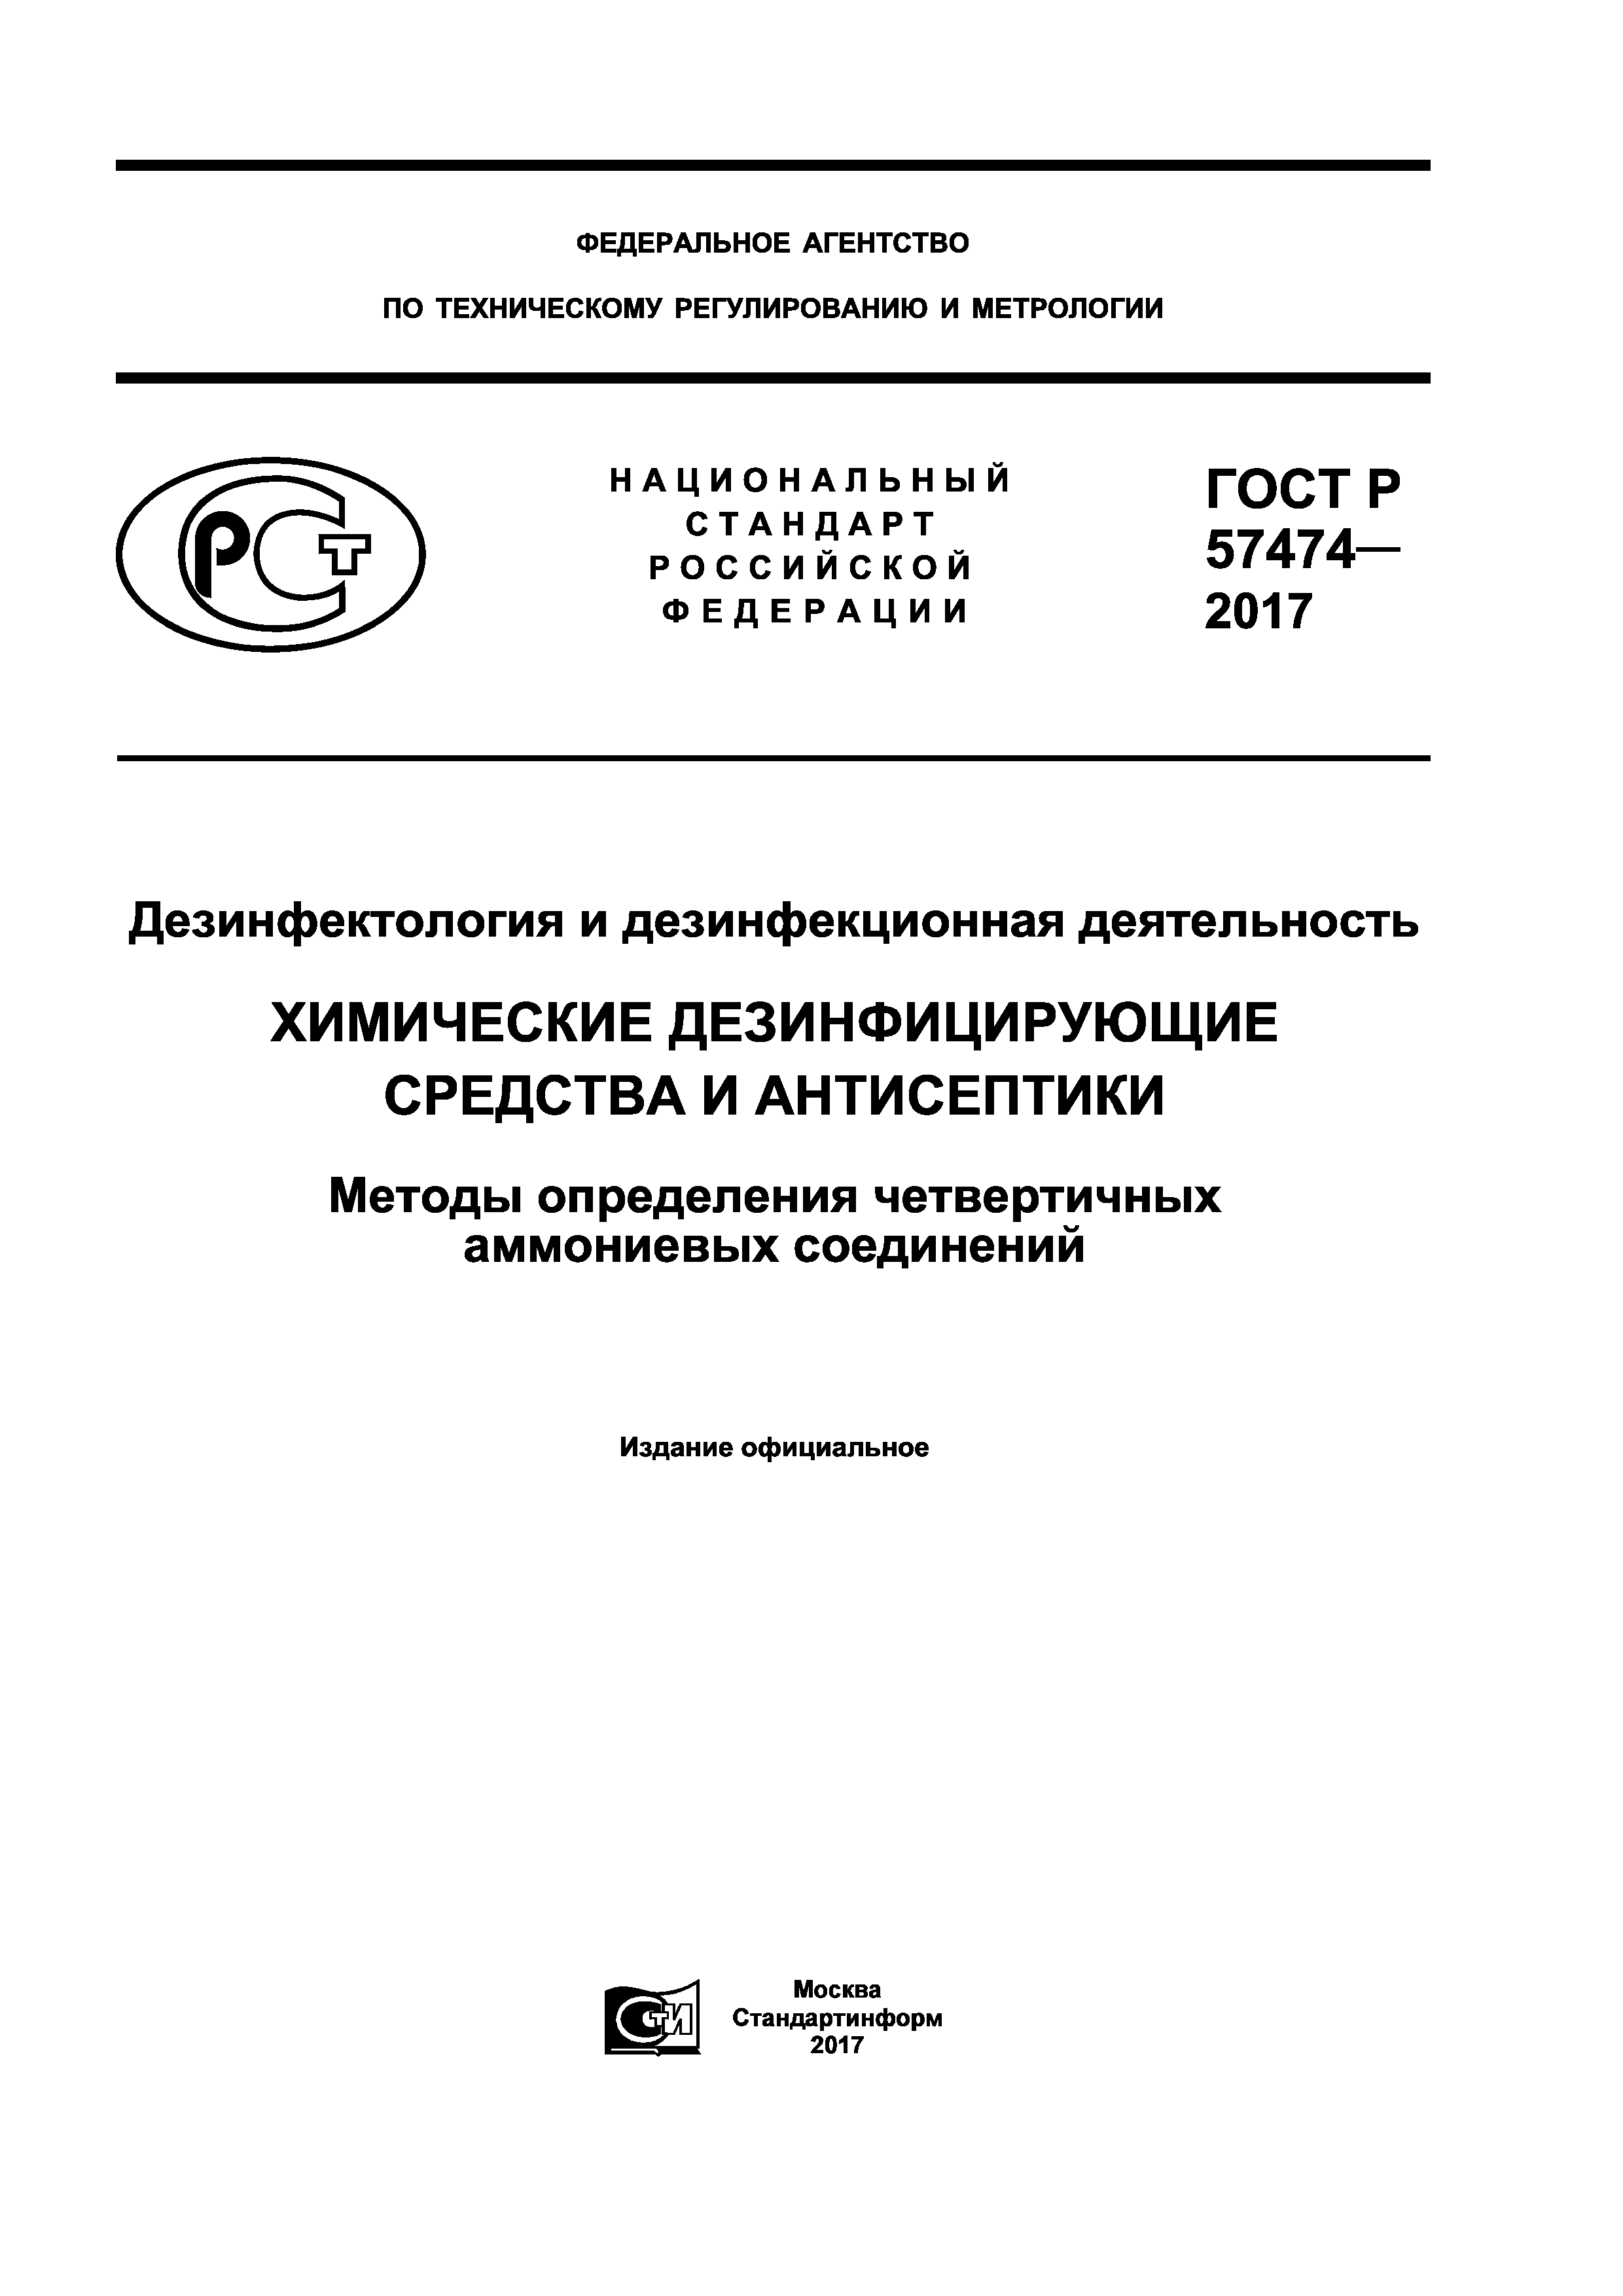 ГОСТ Р 57474-2017